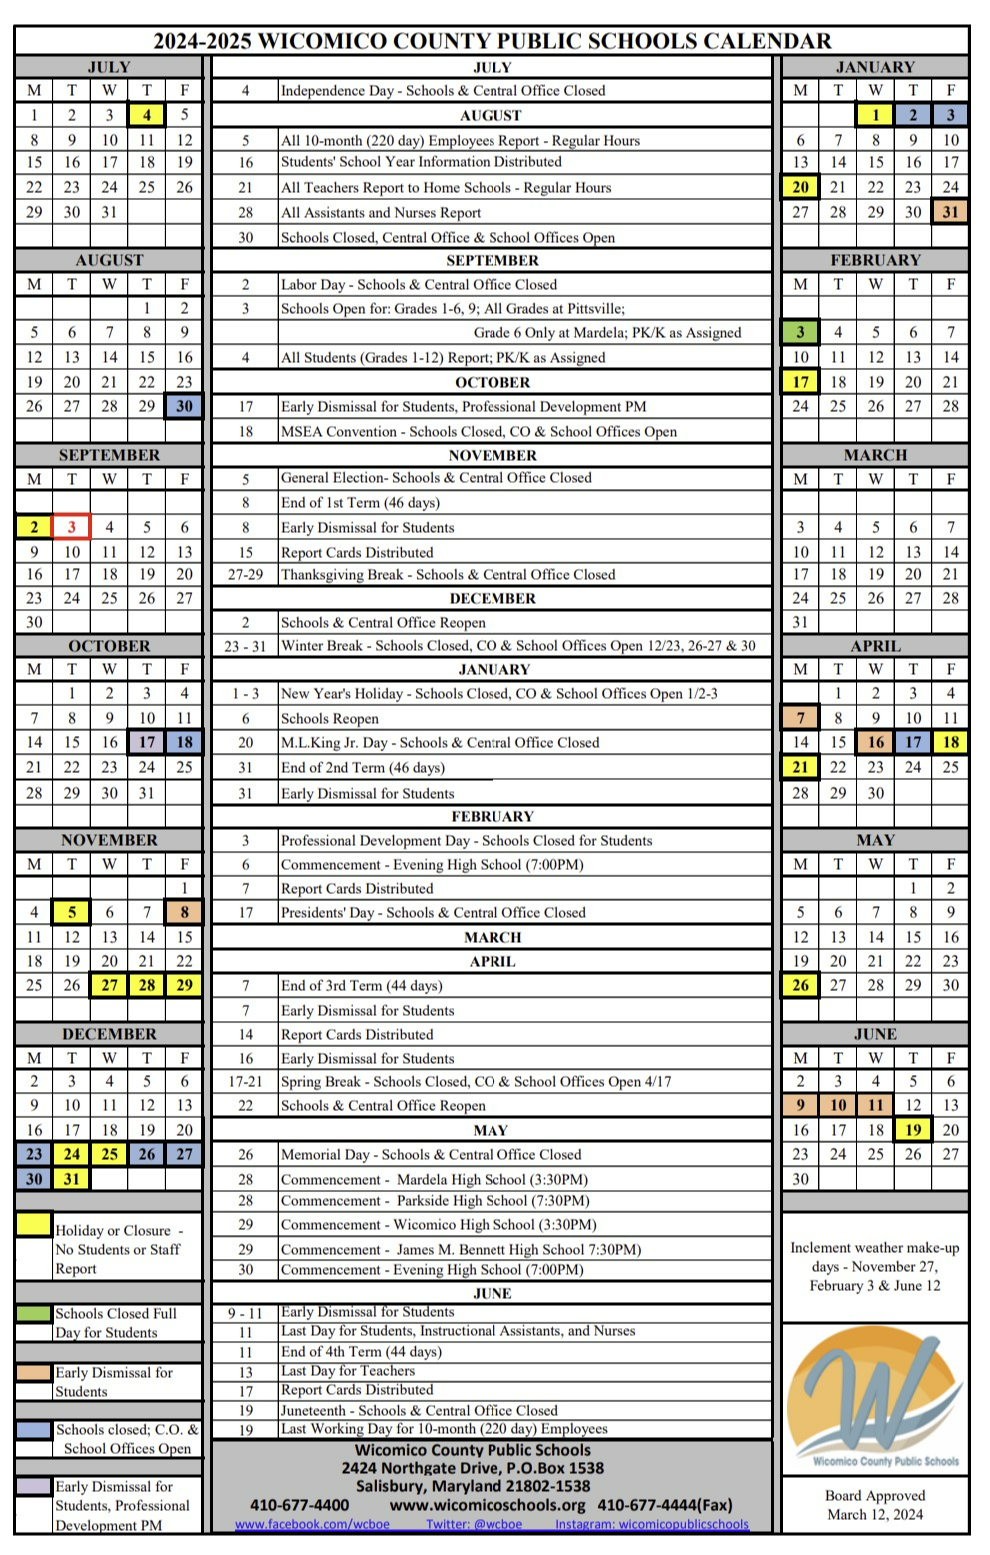 School Calendar for 2024 - 2025